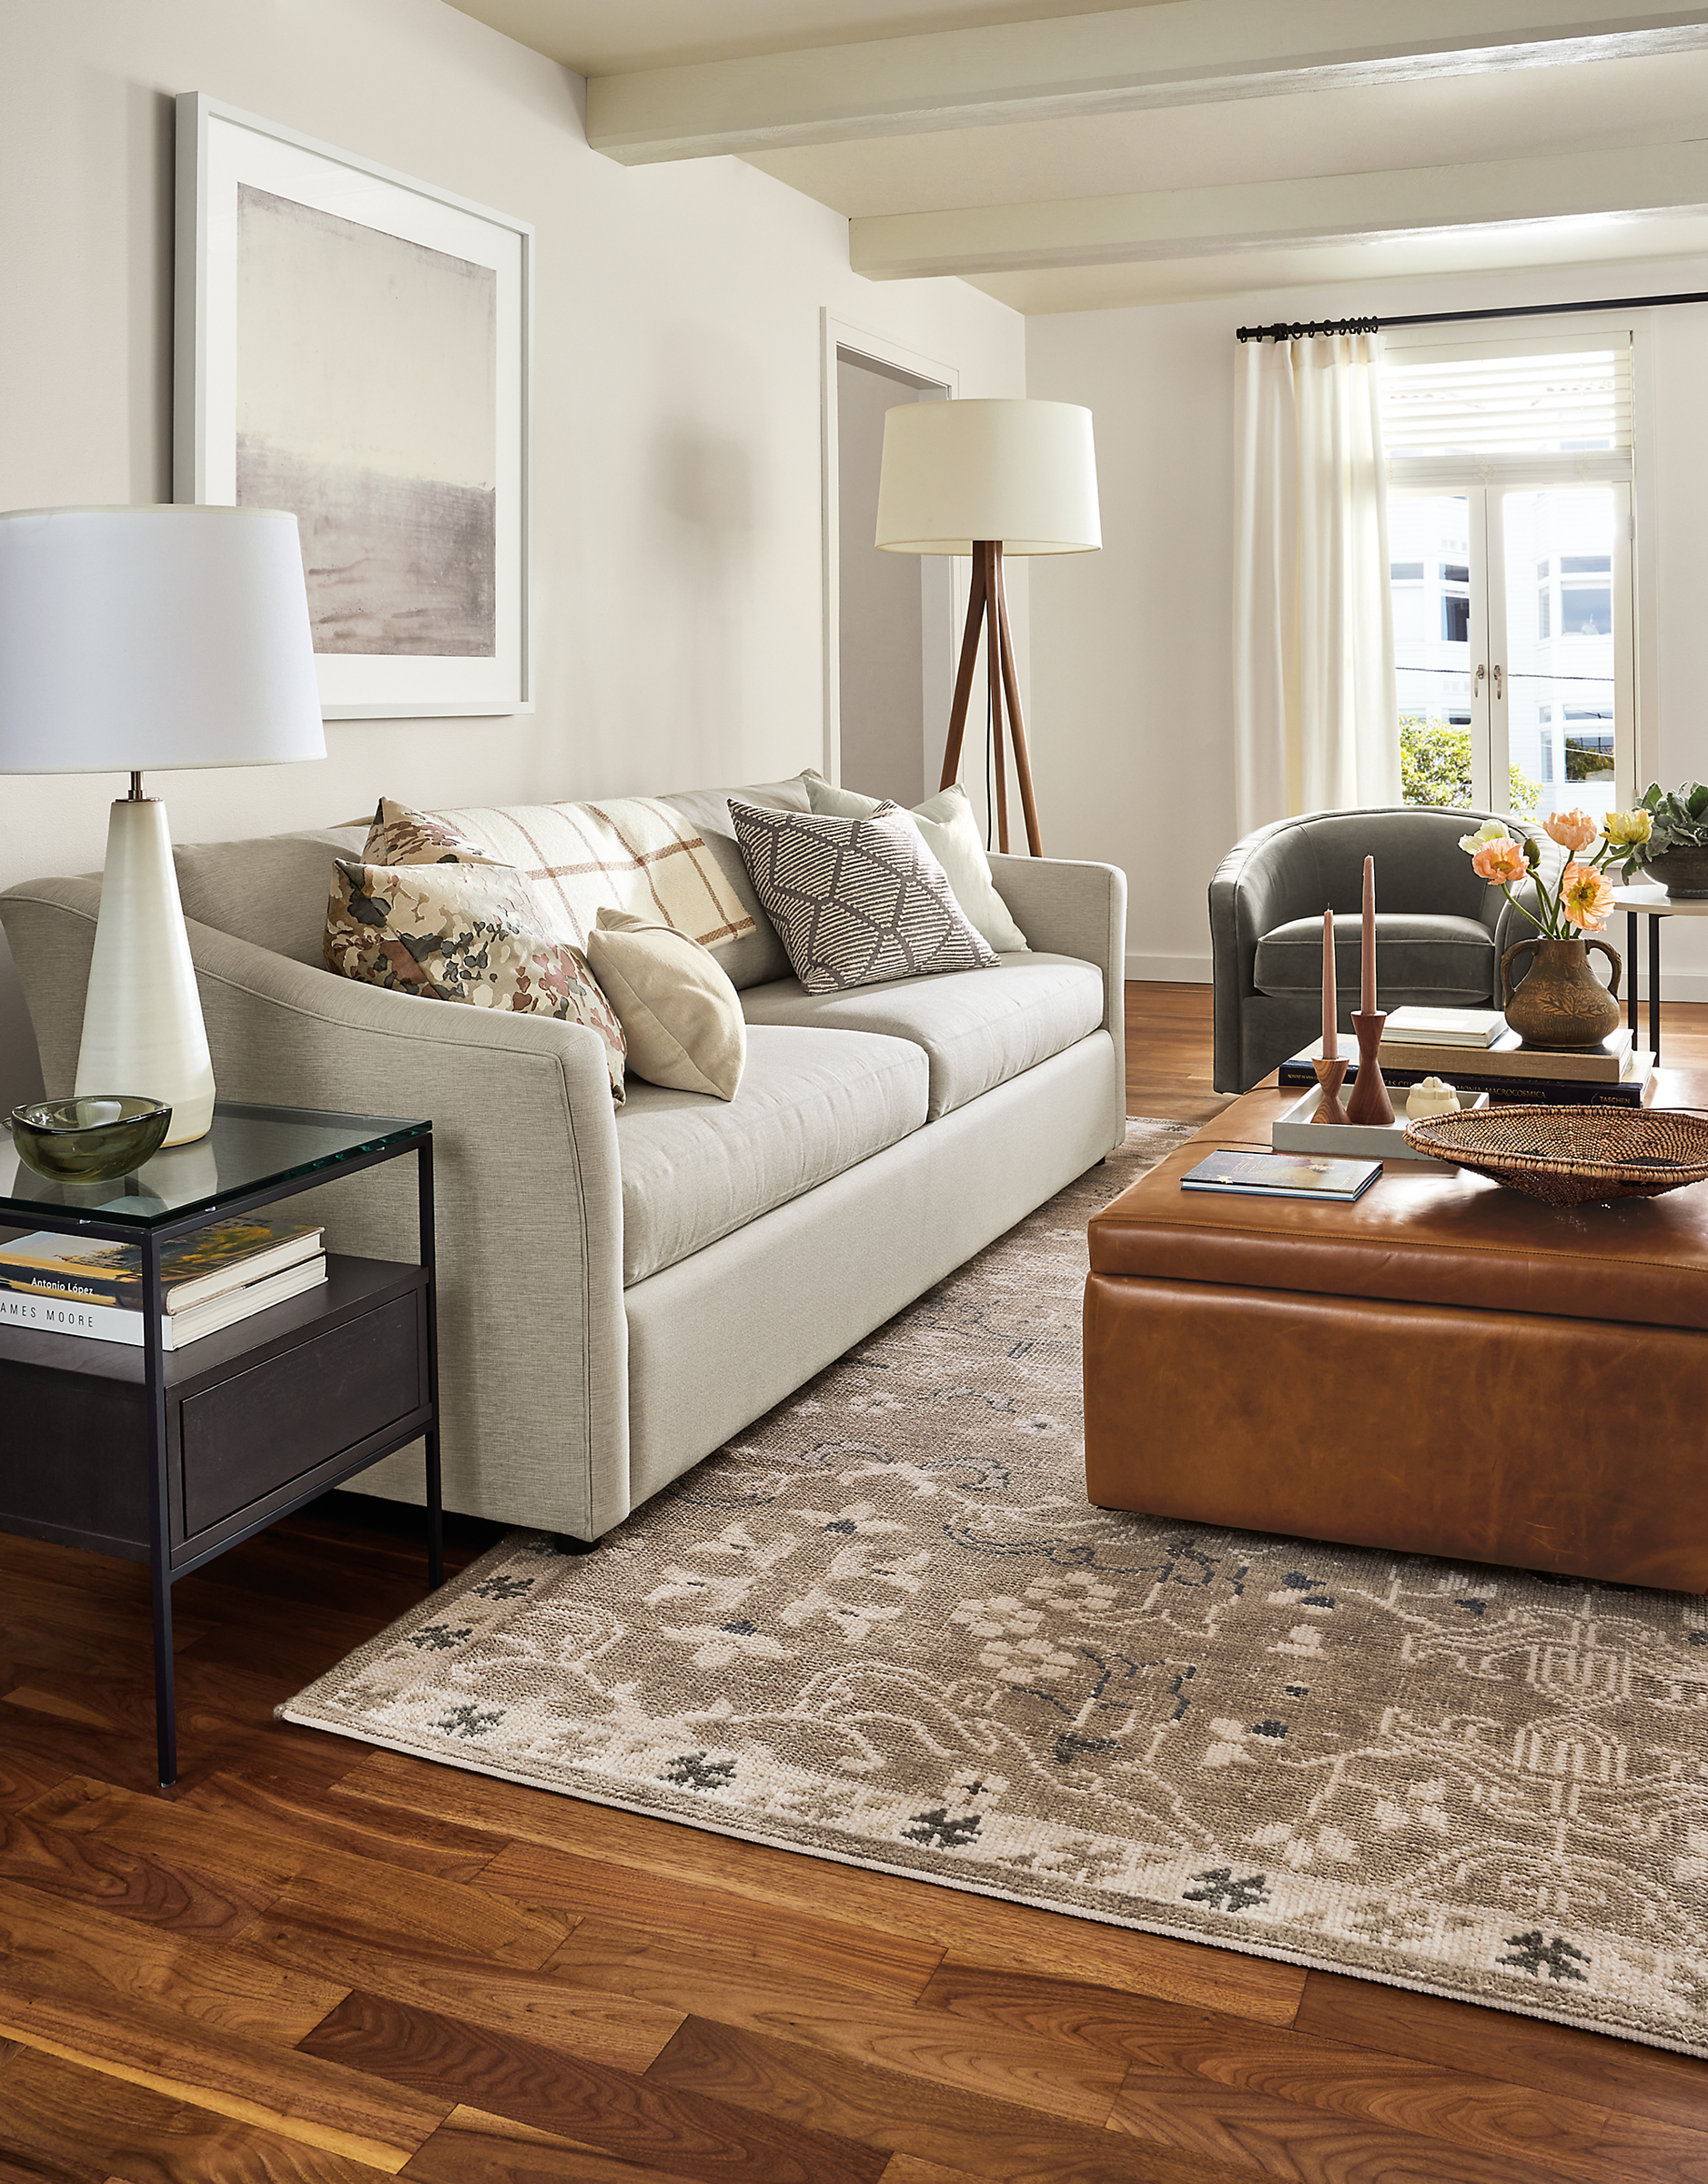 living room with maeve sofa, lind storage ottoman, ophelia rug.